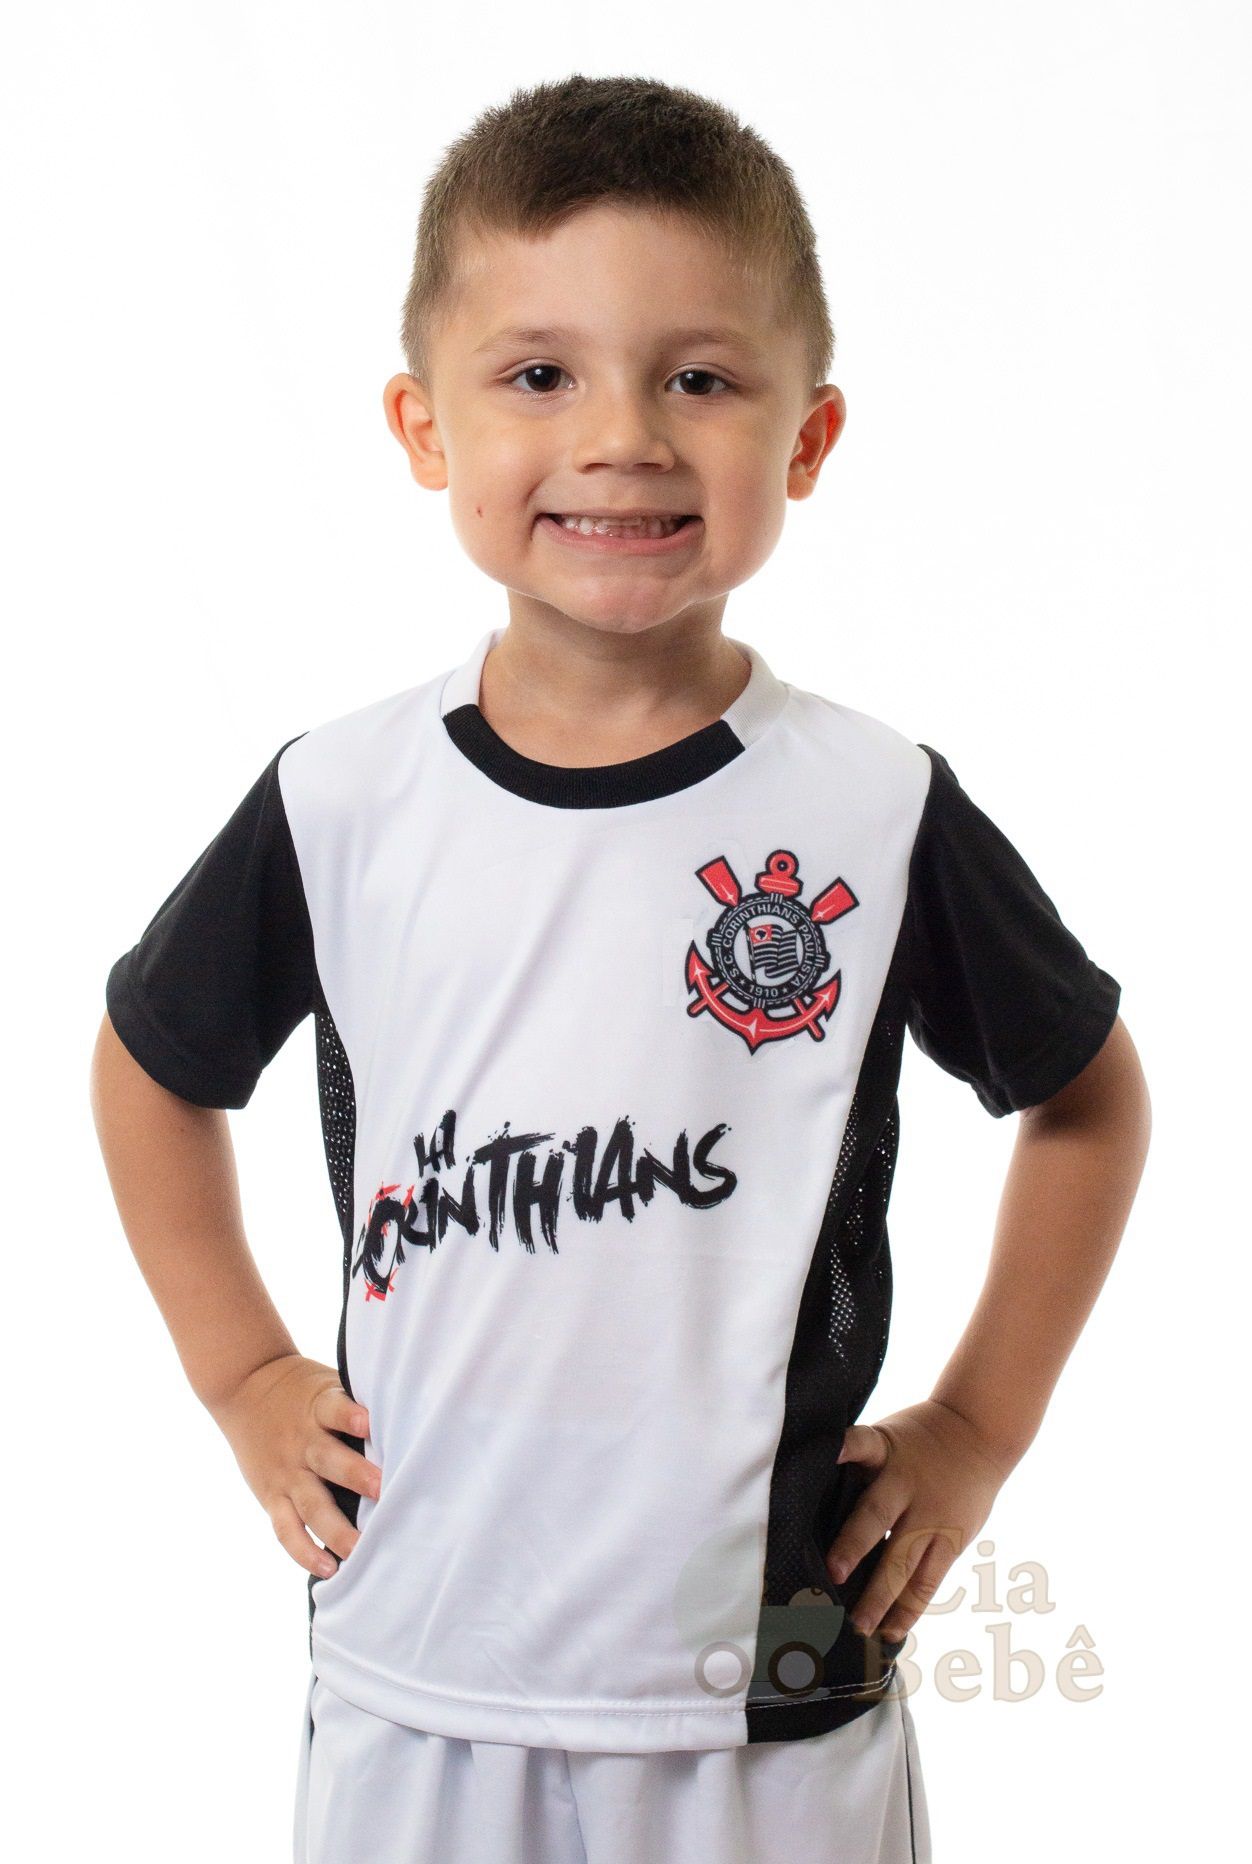 Camiseta Infantil Vai Corinthians - Cia Bebê